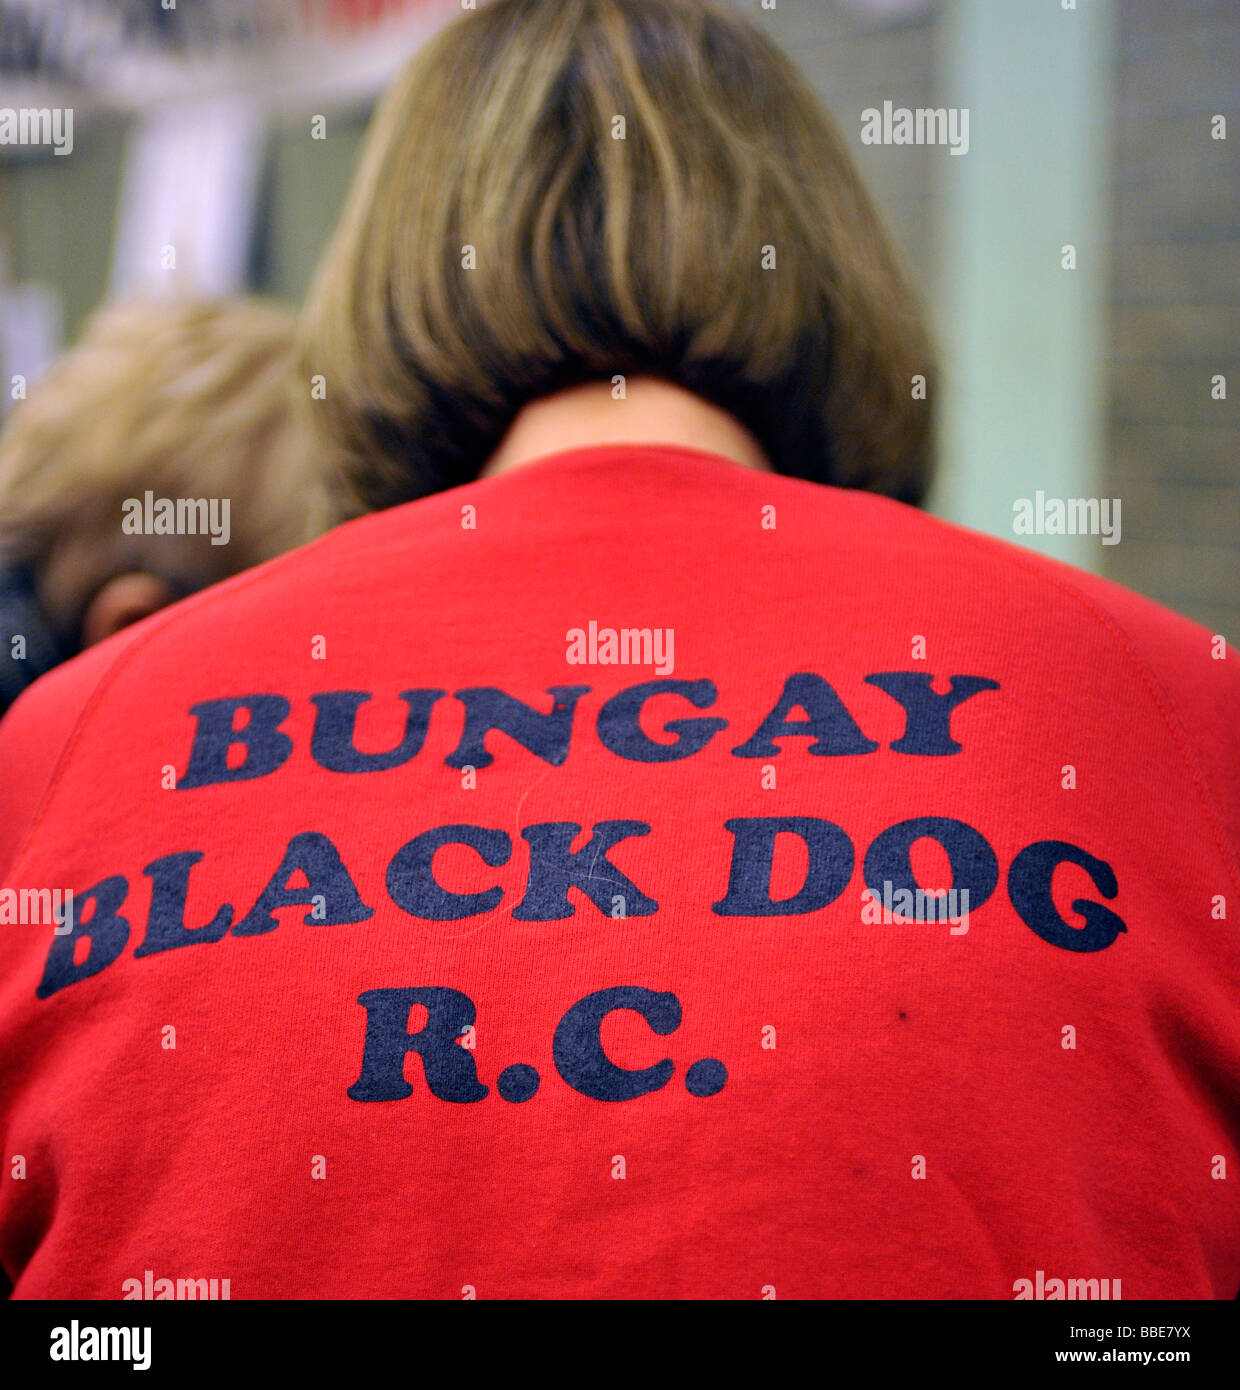 women with black dog running club shirt Bungay suffollk england Stock Photo